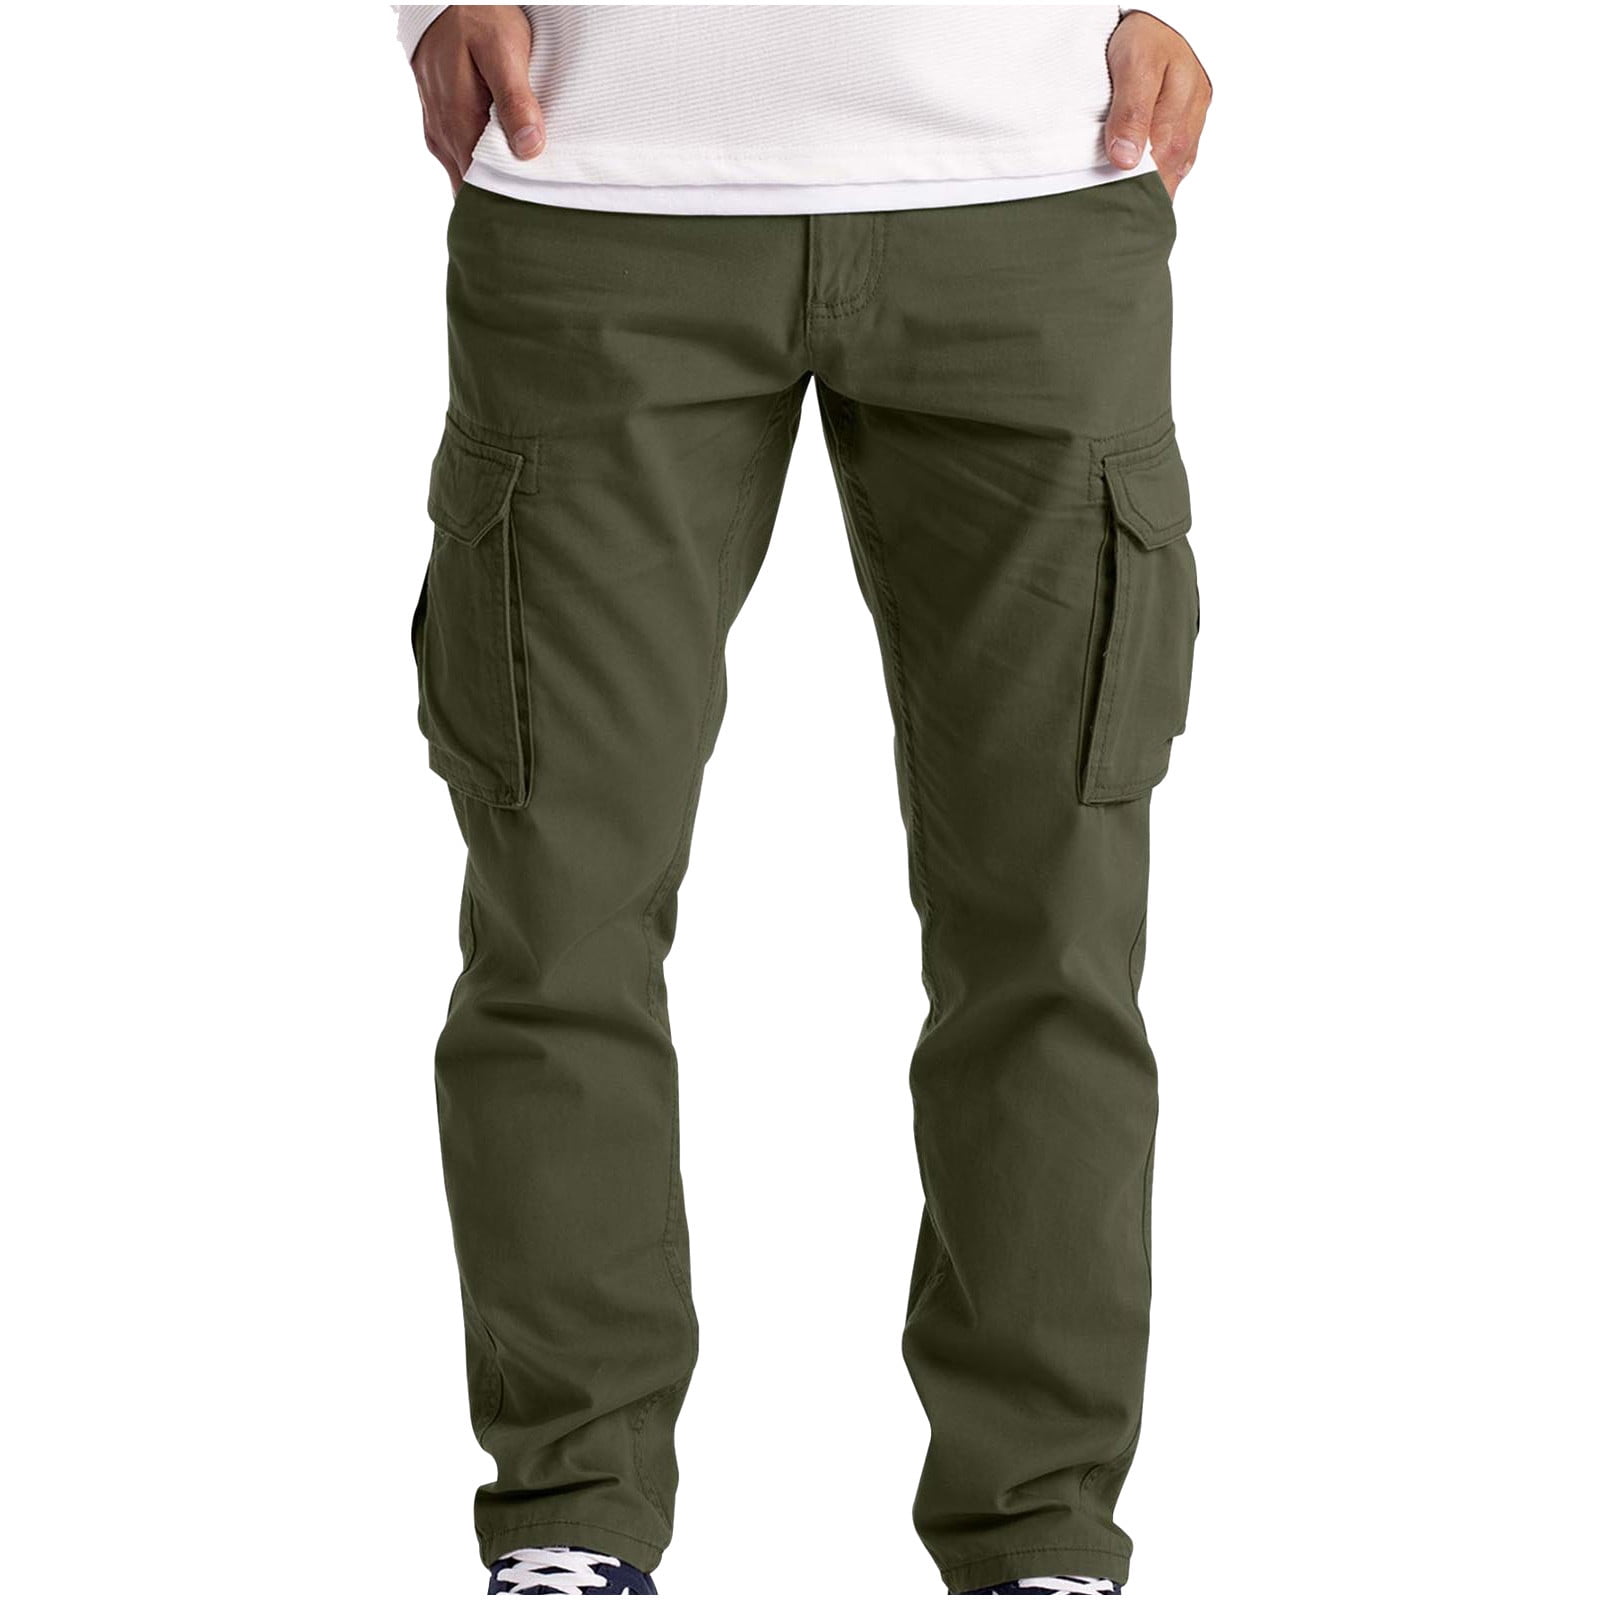 wefuesd cargo pants for men men's pants cargo wear cargo men's full 6  pocket work pants trousers men's pants cargo pants dark green s -  Walmart.com